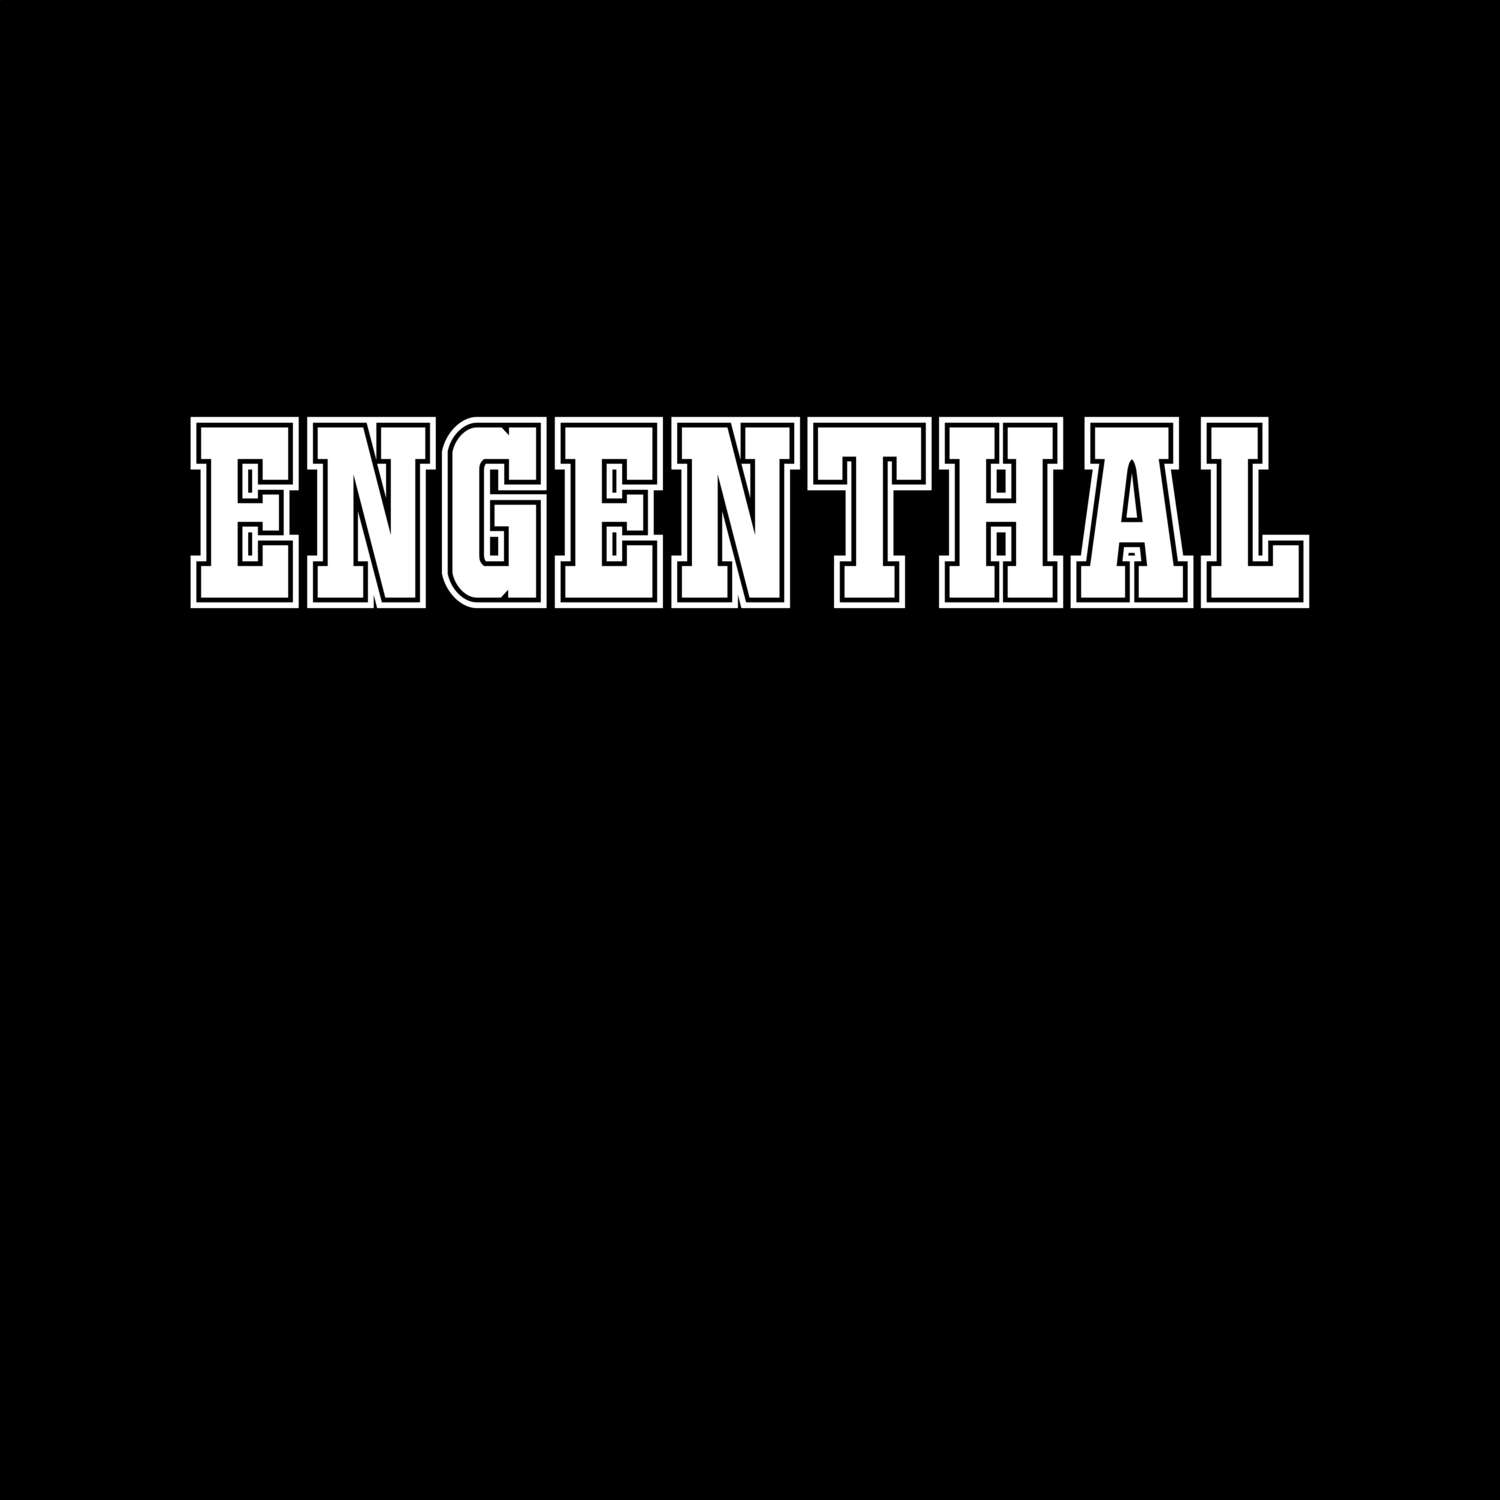 Engenthal T-Shirt »Classic«